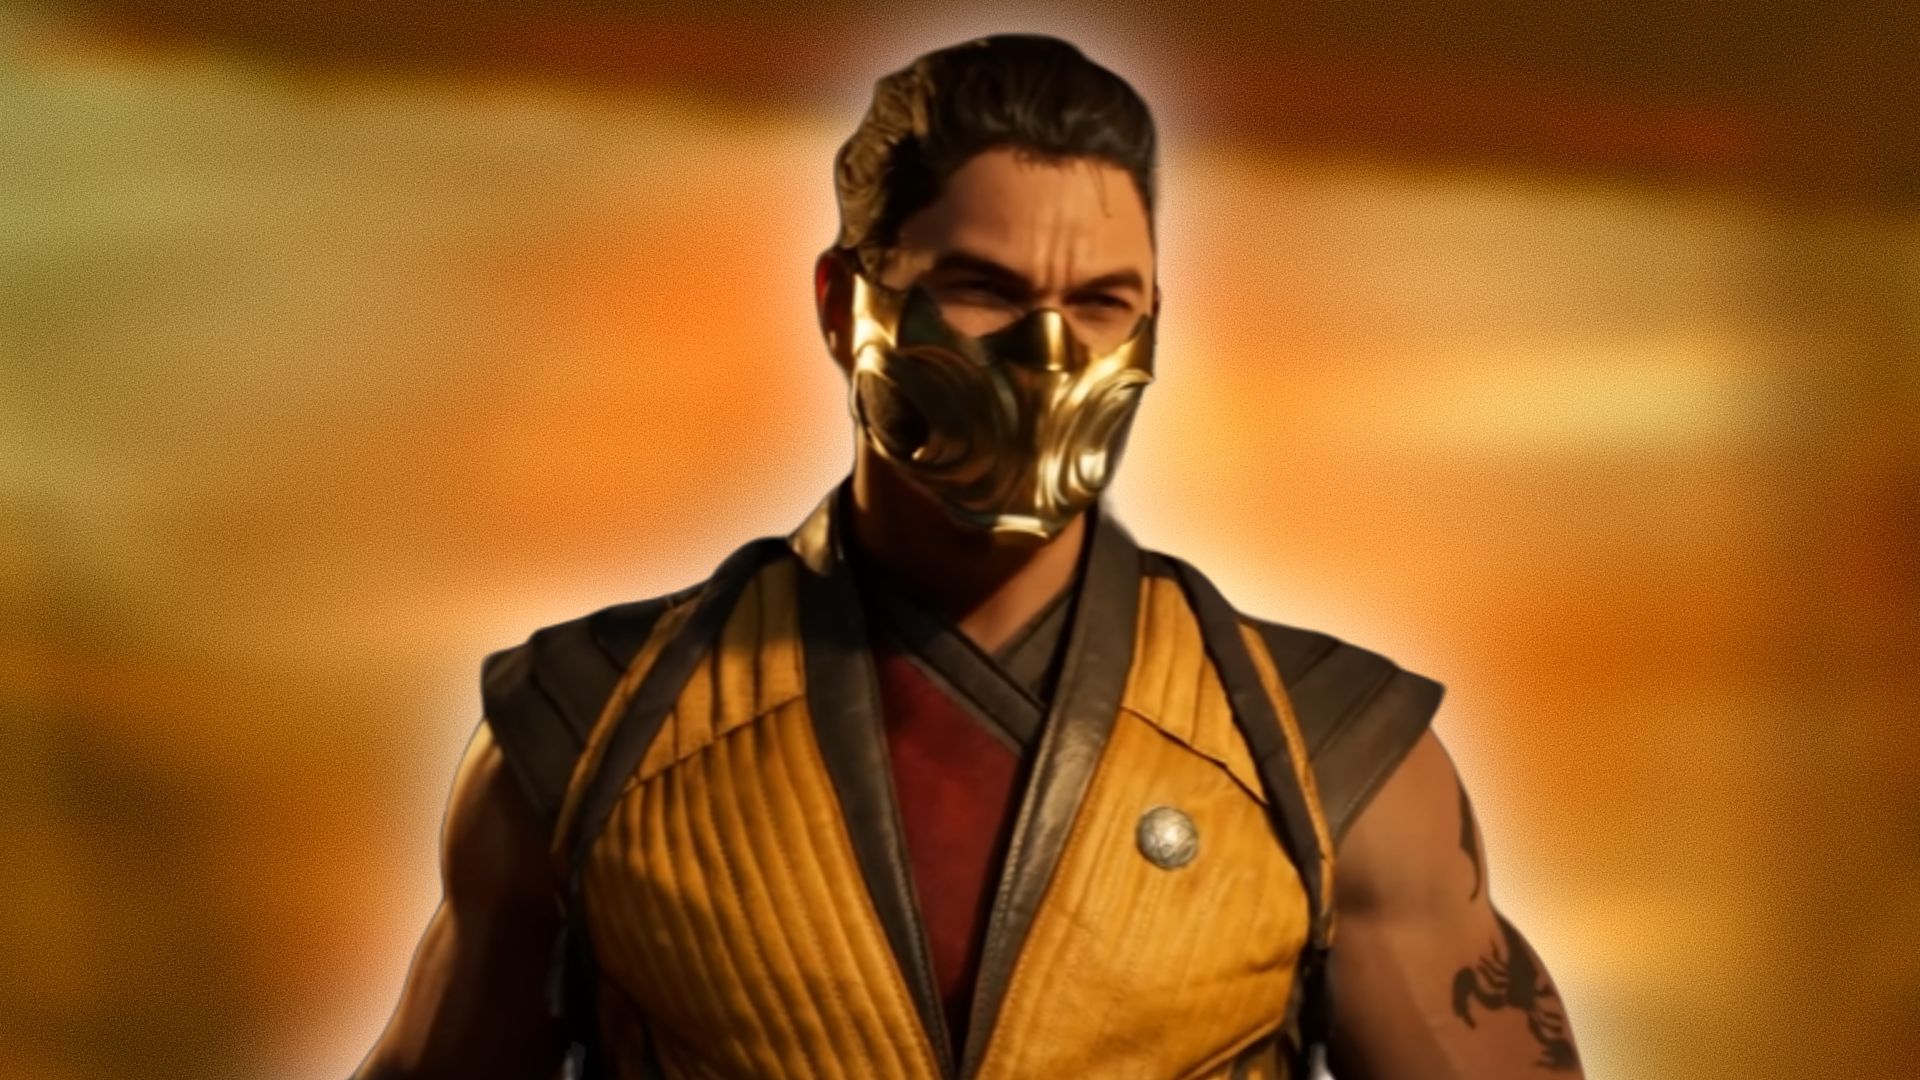 Mortal Kombat 1 release date, story, gameplay, DLC